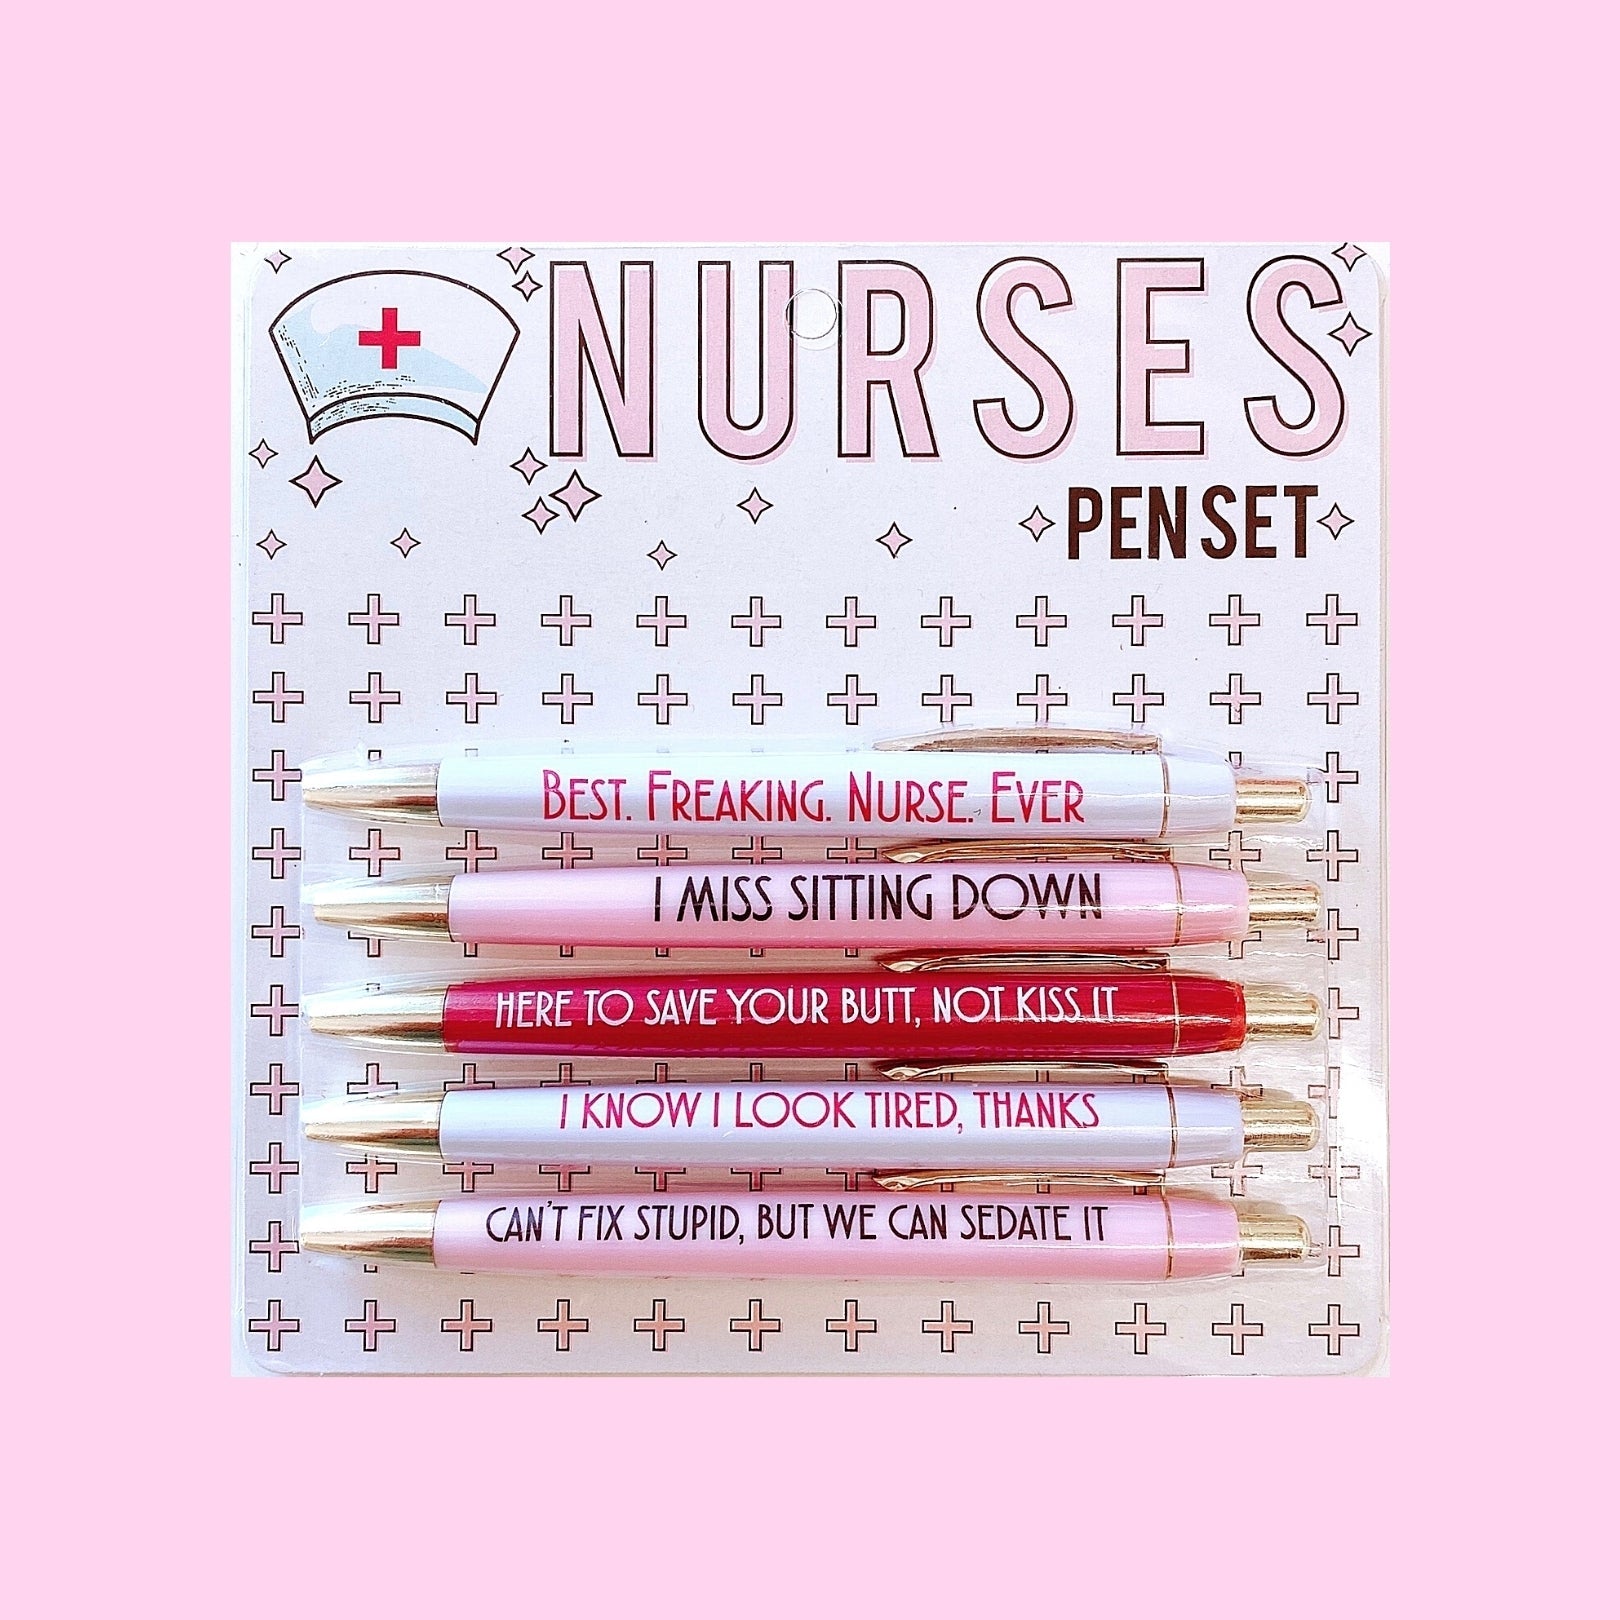 Nurses Multicolor Pen Set | 5 Funny Pens Packaged for Gifting | Best. Freaking. Nurse. Ever. , I Miss Sitting Down